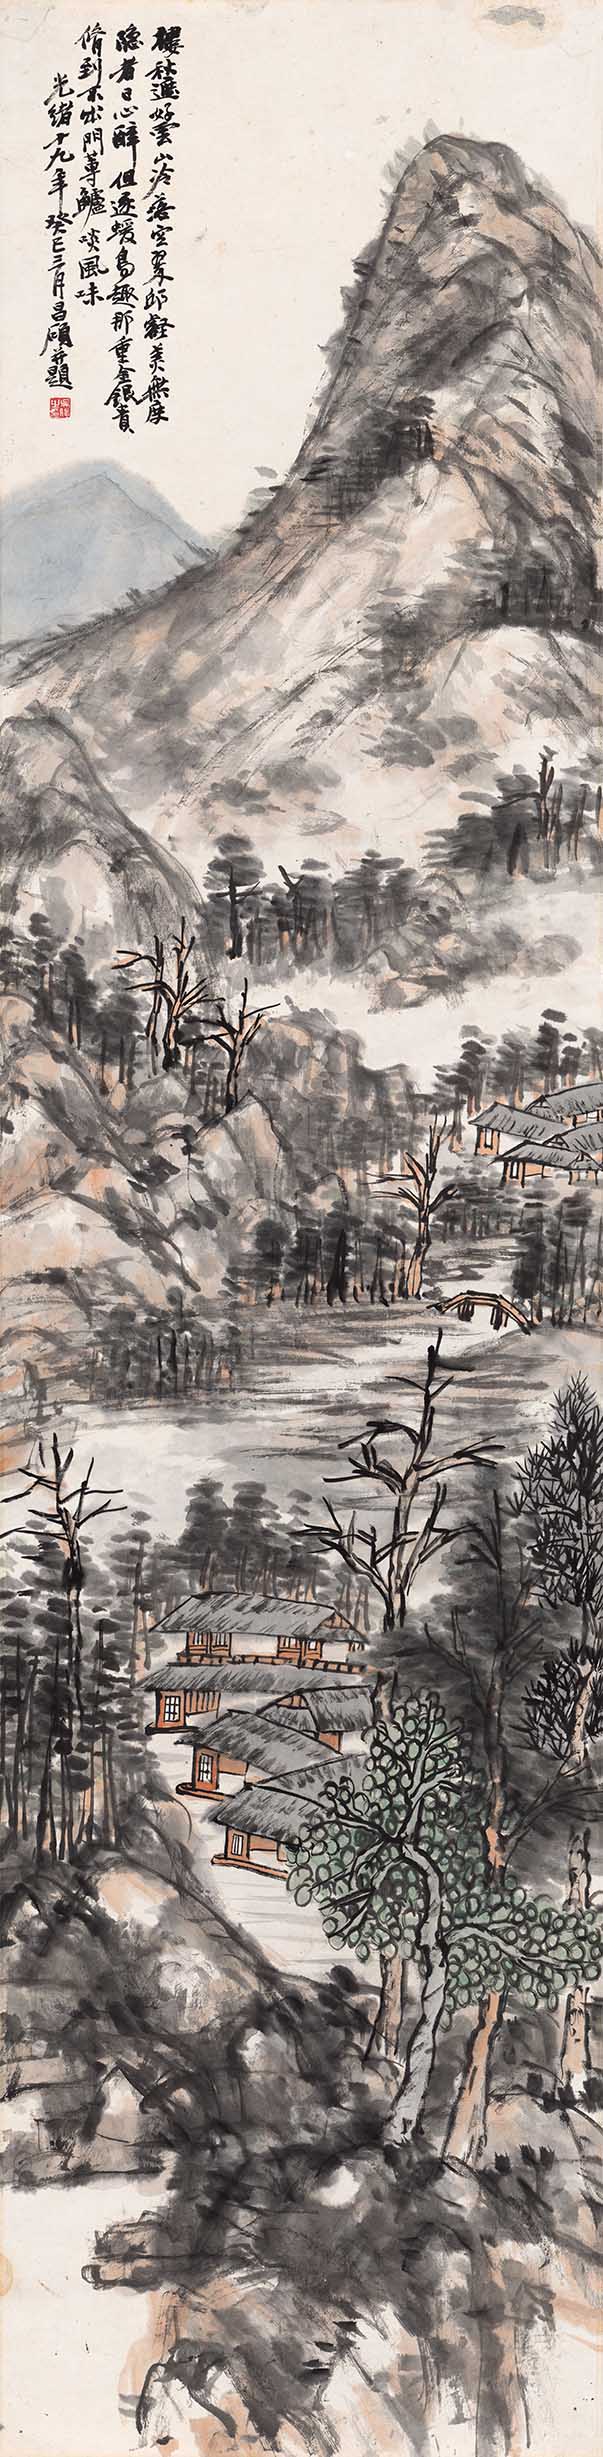 Chinese Antique Art Painting 清 吴昌硕 山水轴 Qing Wu Changshou Shan Shui Landscape